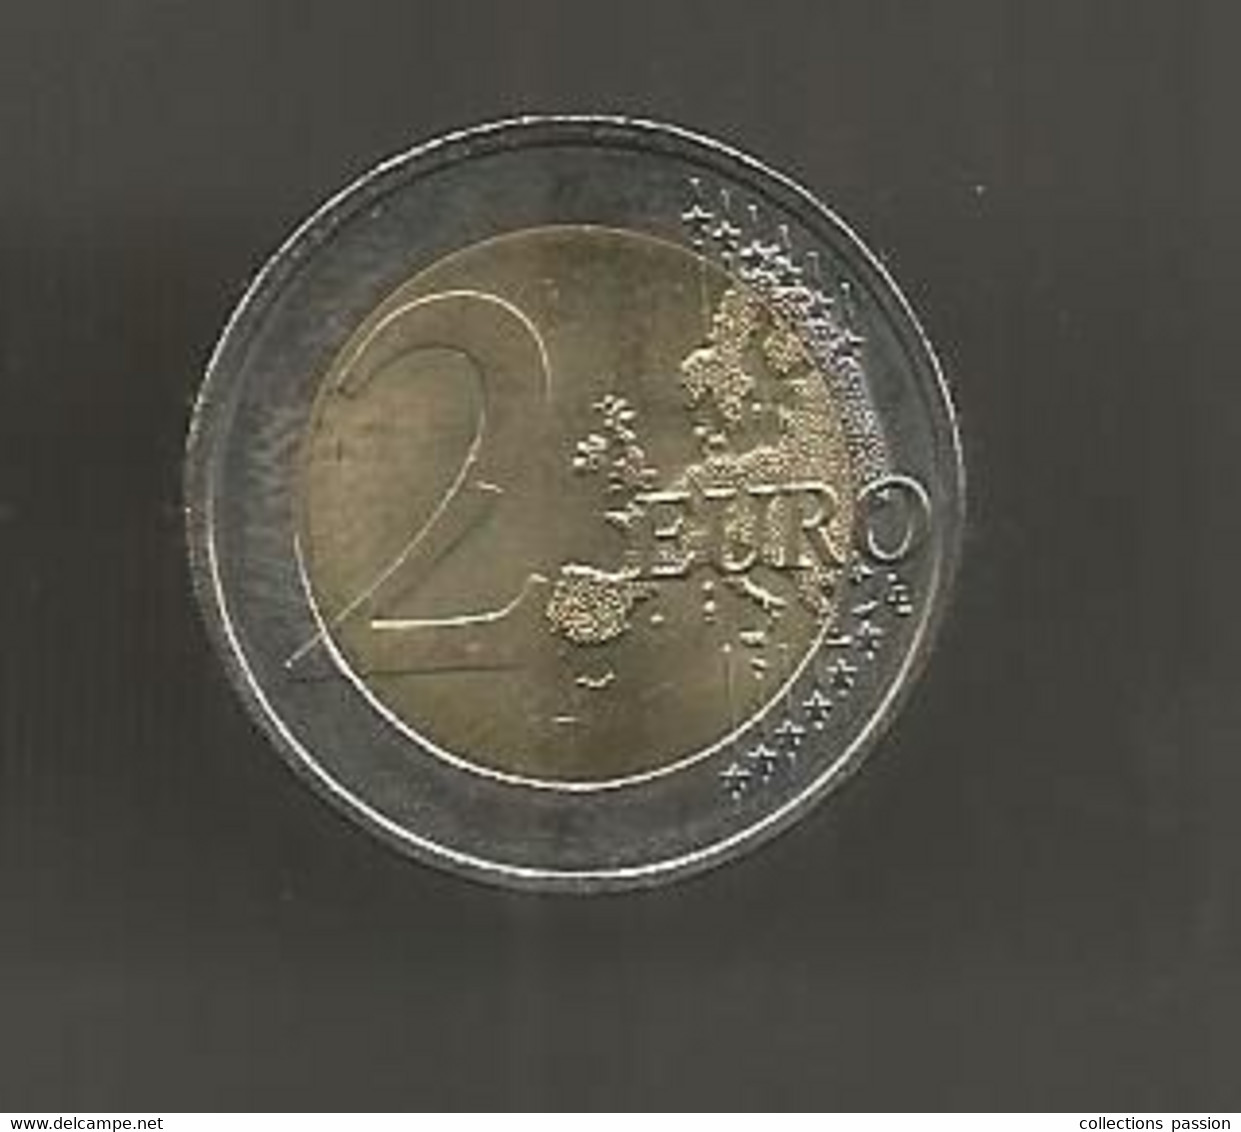 Monnaie Commémorative De 2 € , EURO , ALLEMAGNE , BUNDESREPUBLIK DEUTSCHLAND , 2002-2012 ,  2 Scans - Deutschland